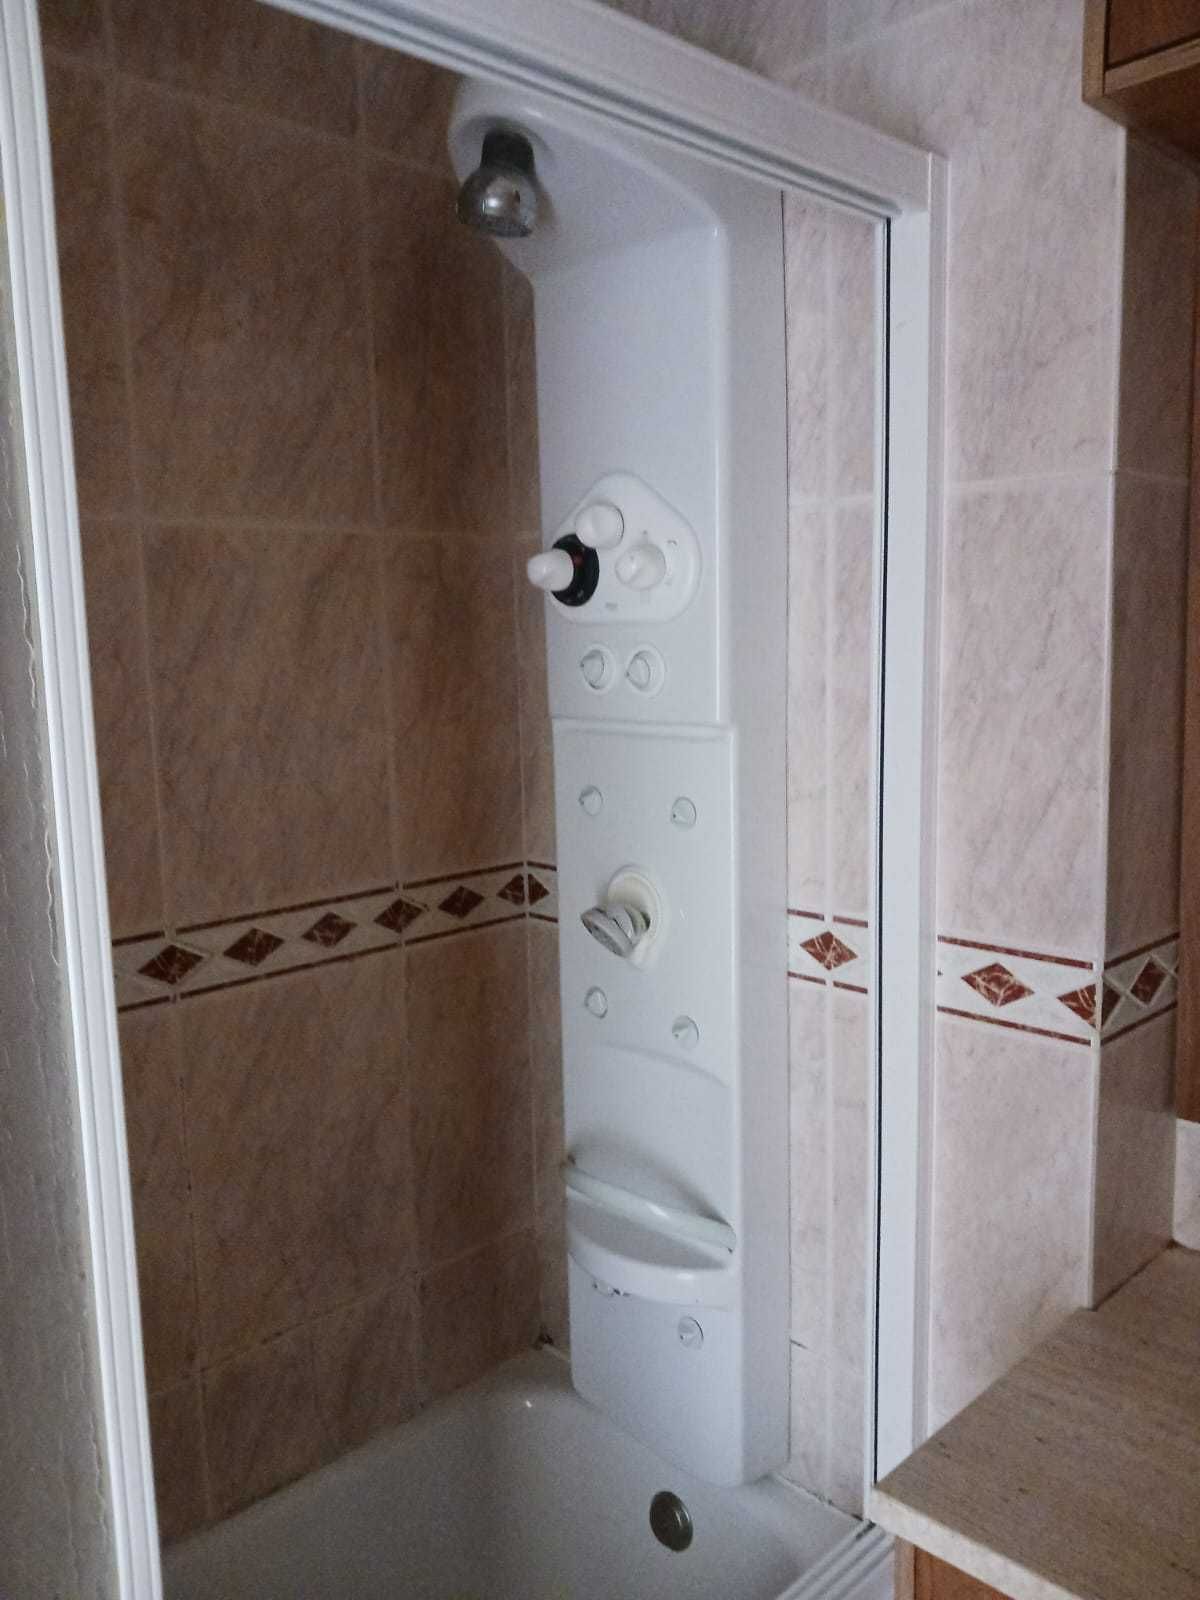 WC coluna duche + bidé + resguardo)